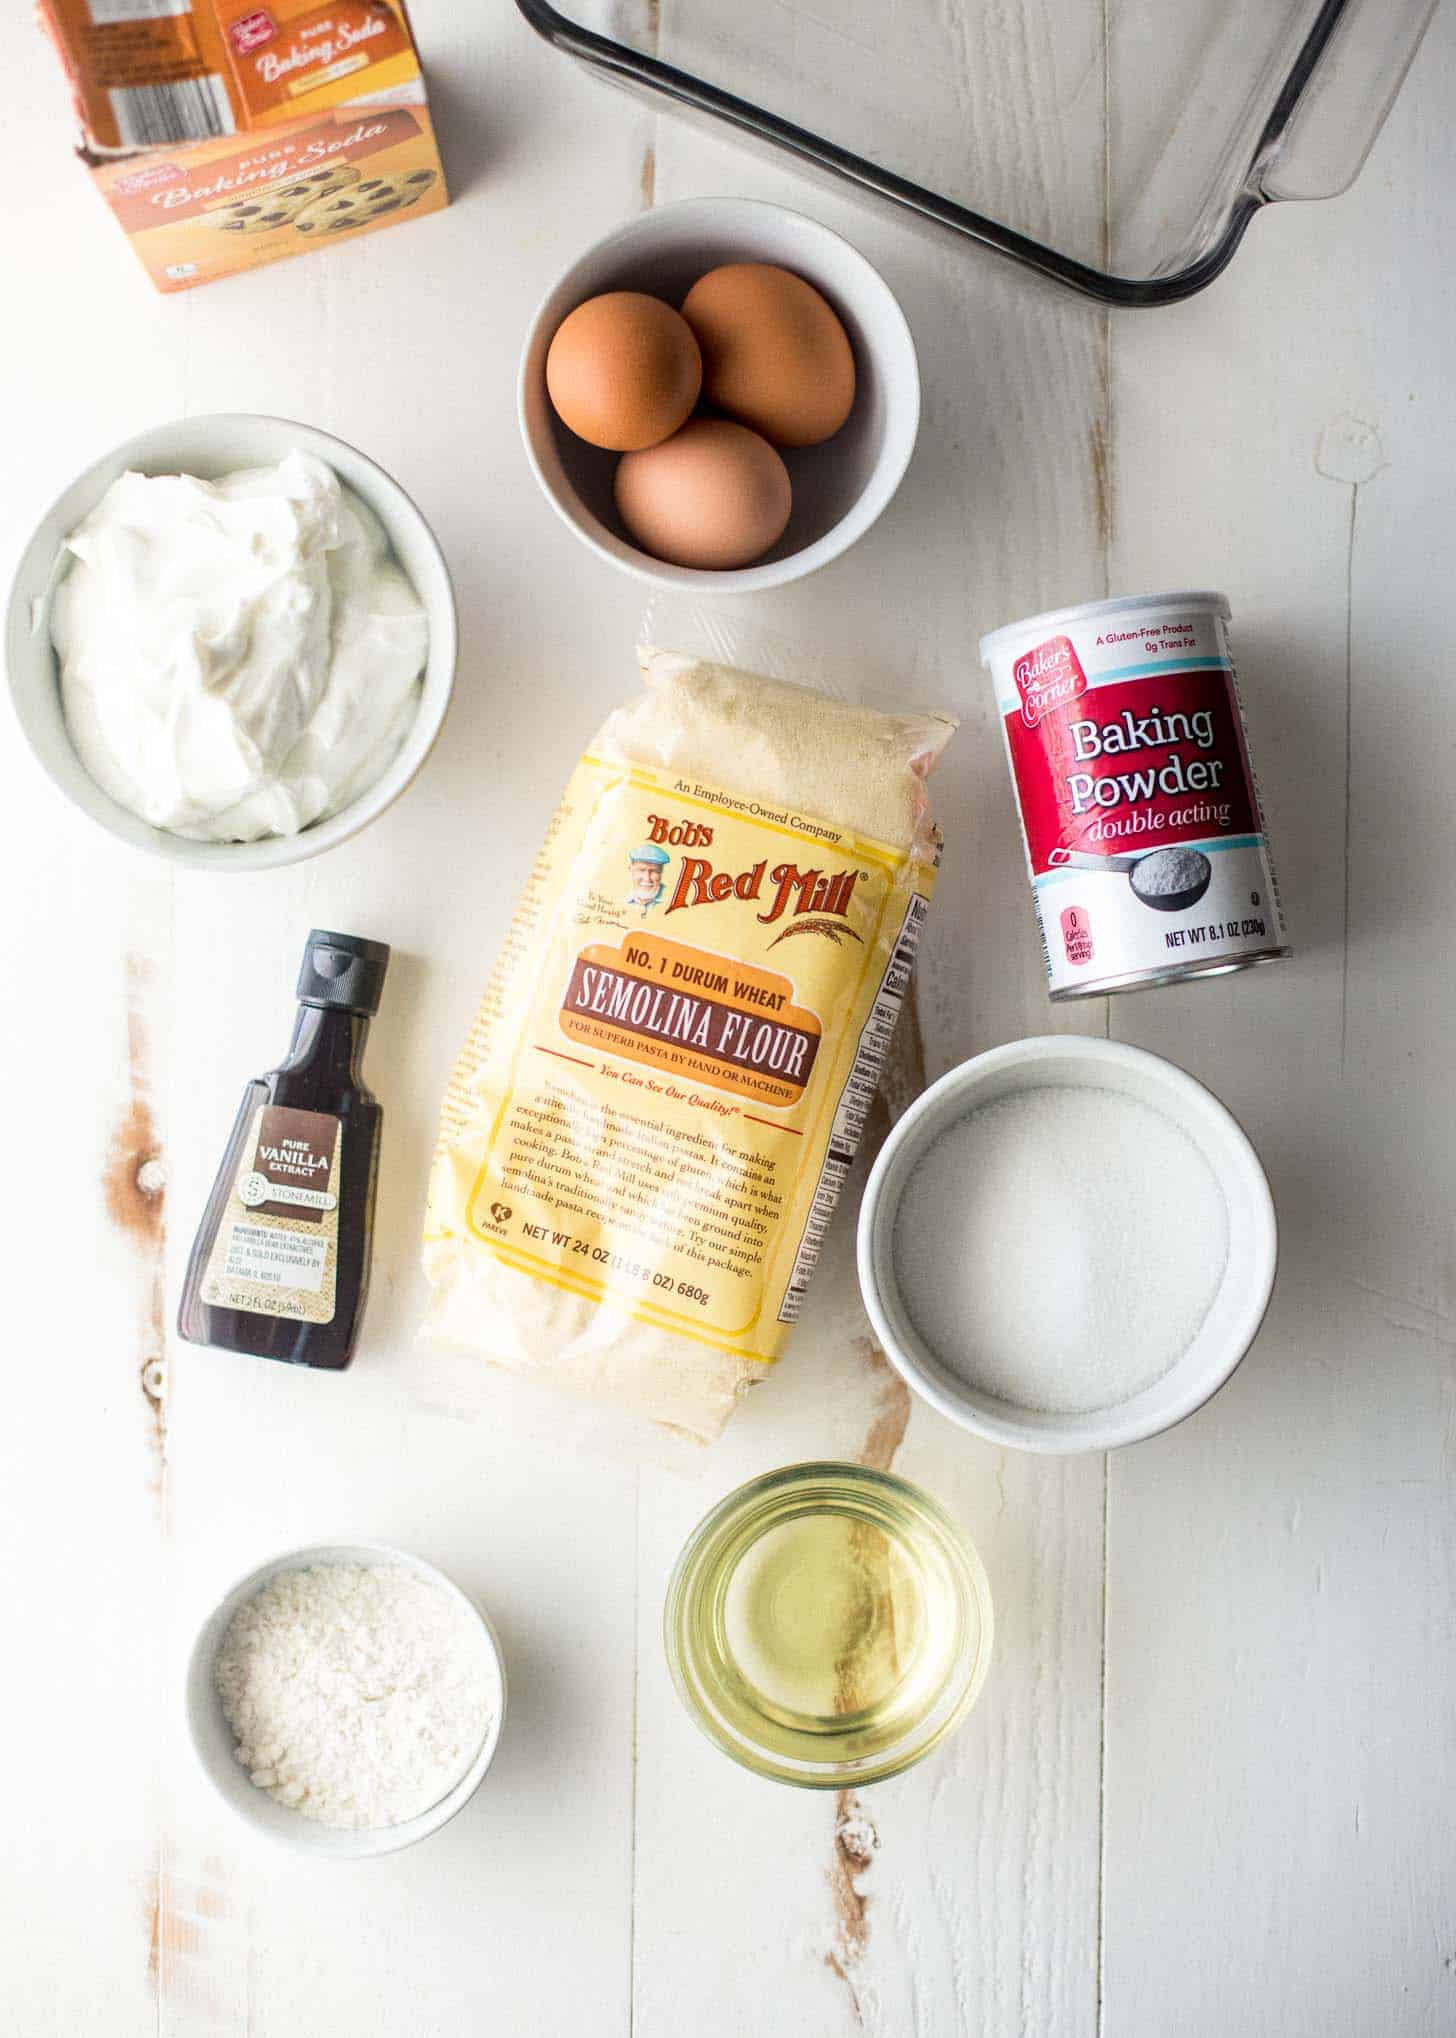 eggs, semolina flour, baking powder, vanilla, oil, sugar, and salt on a white table